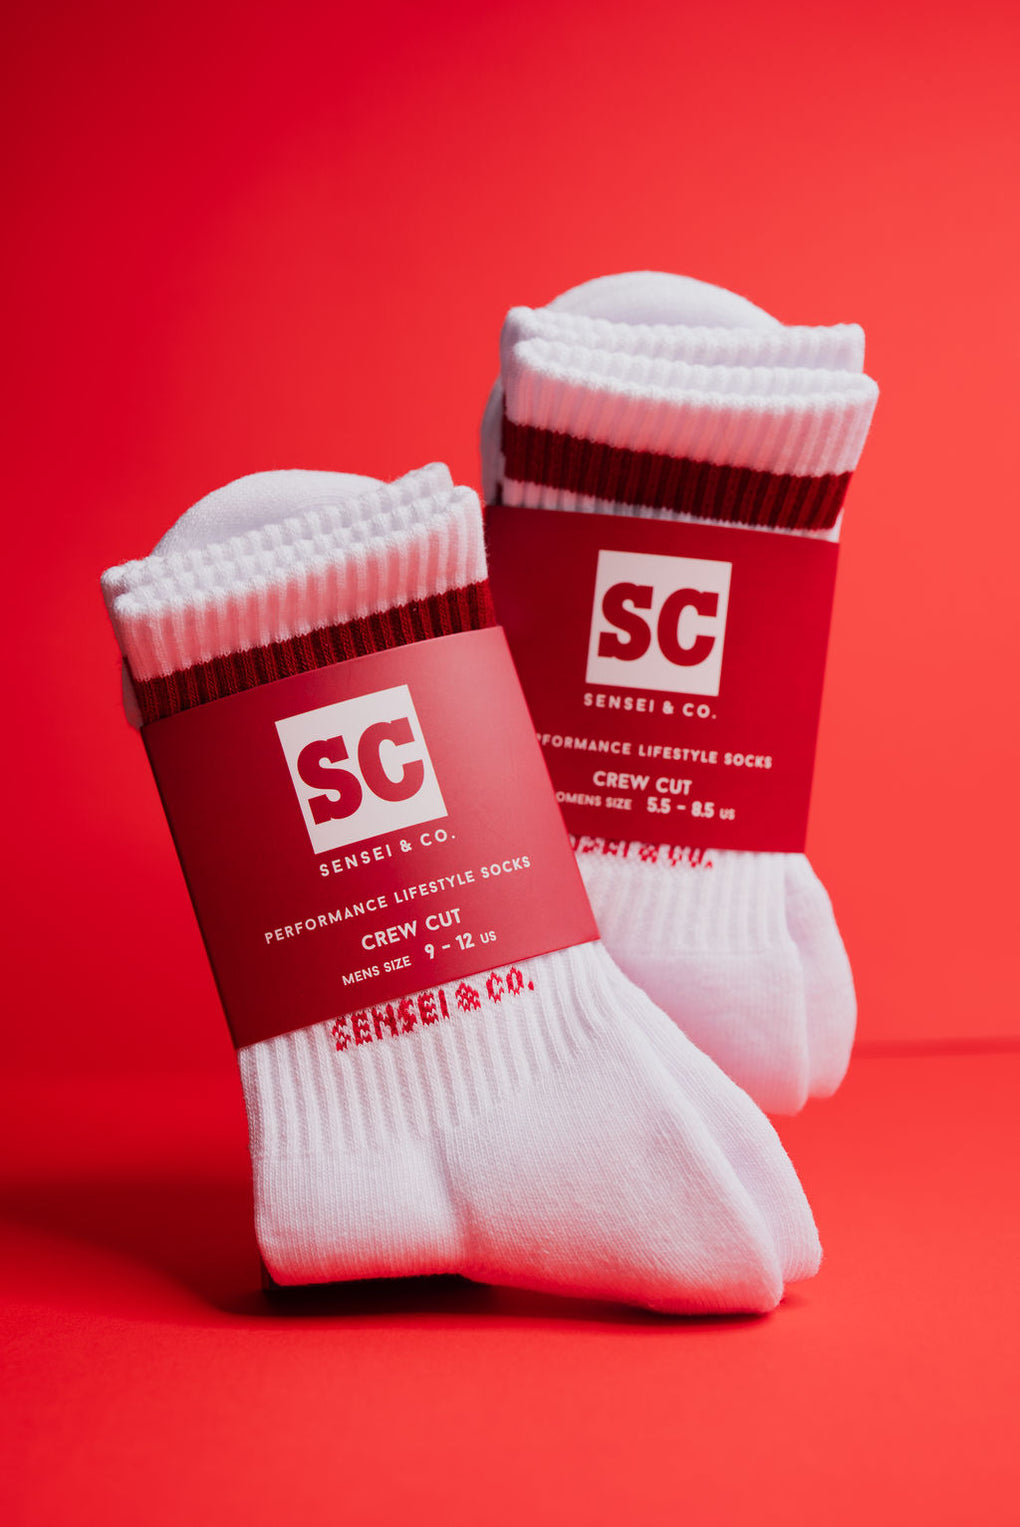 Sensei & Co. Varsity Socks - Hybrid Crew Cut